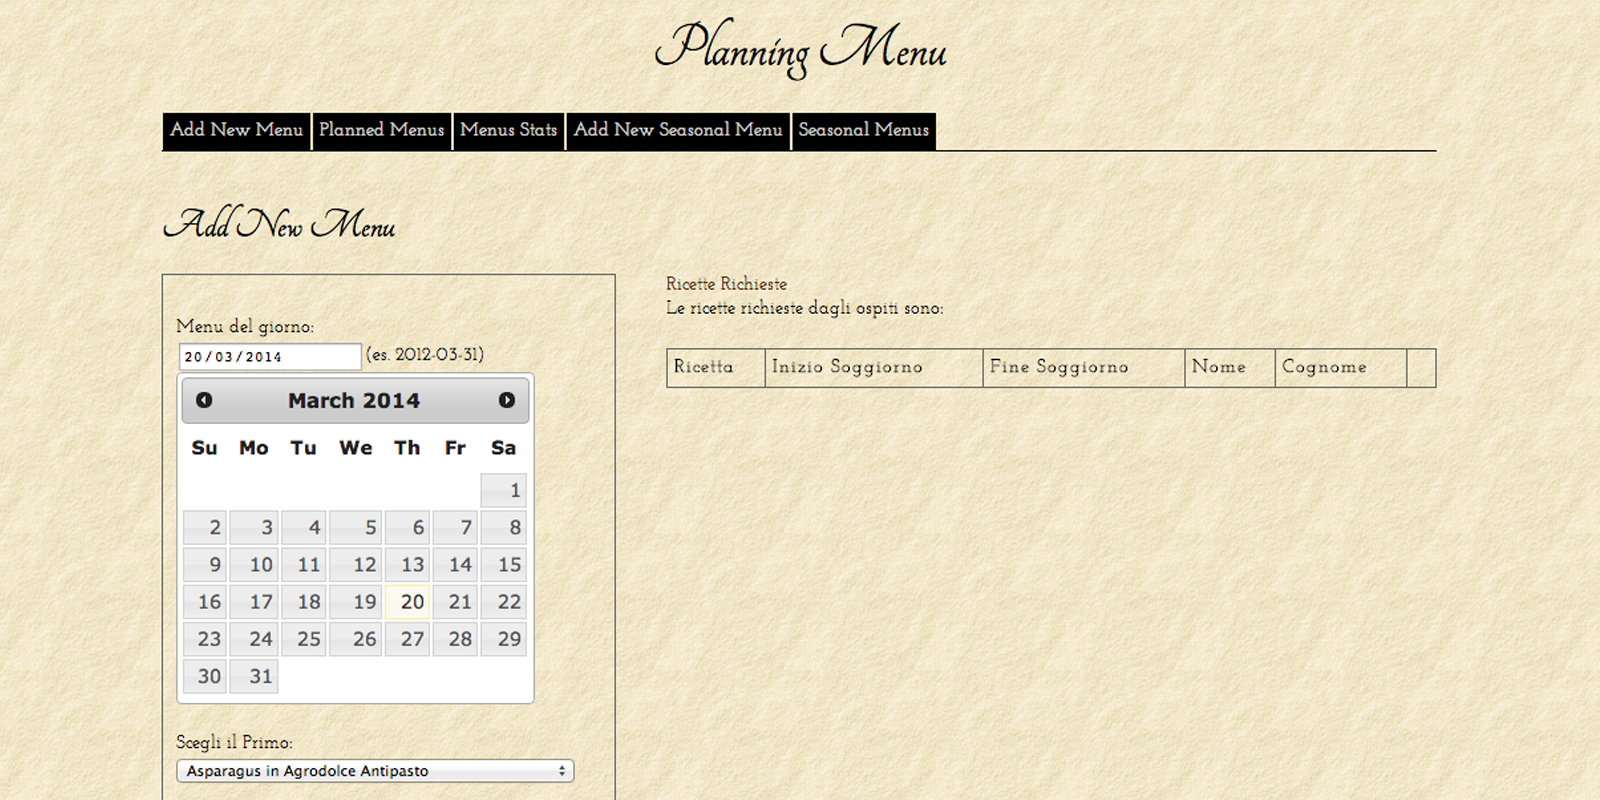 the menu planner system